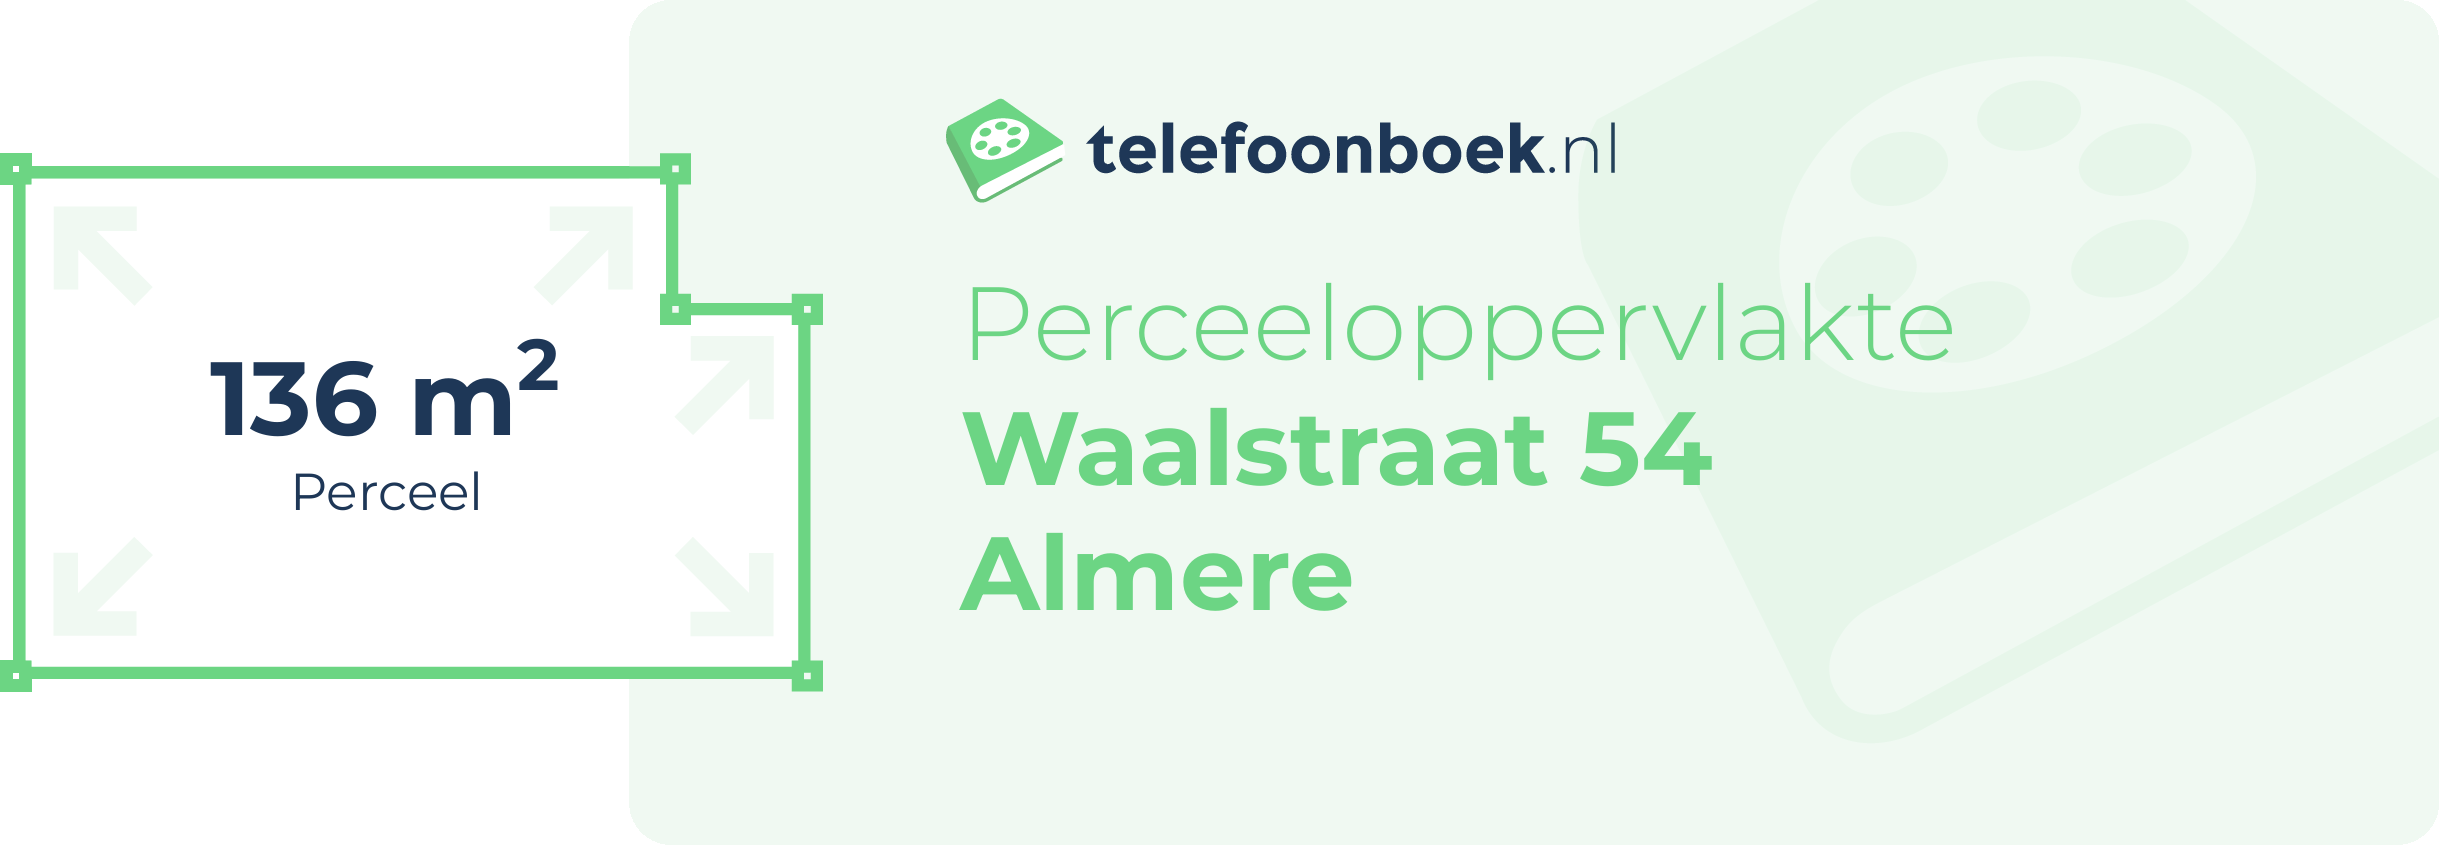 Perceeloppervlakte Waalstraat 54 Almere